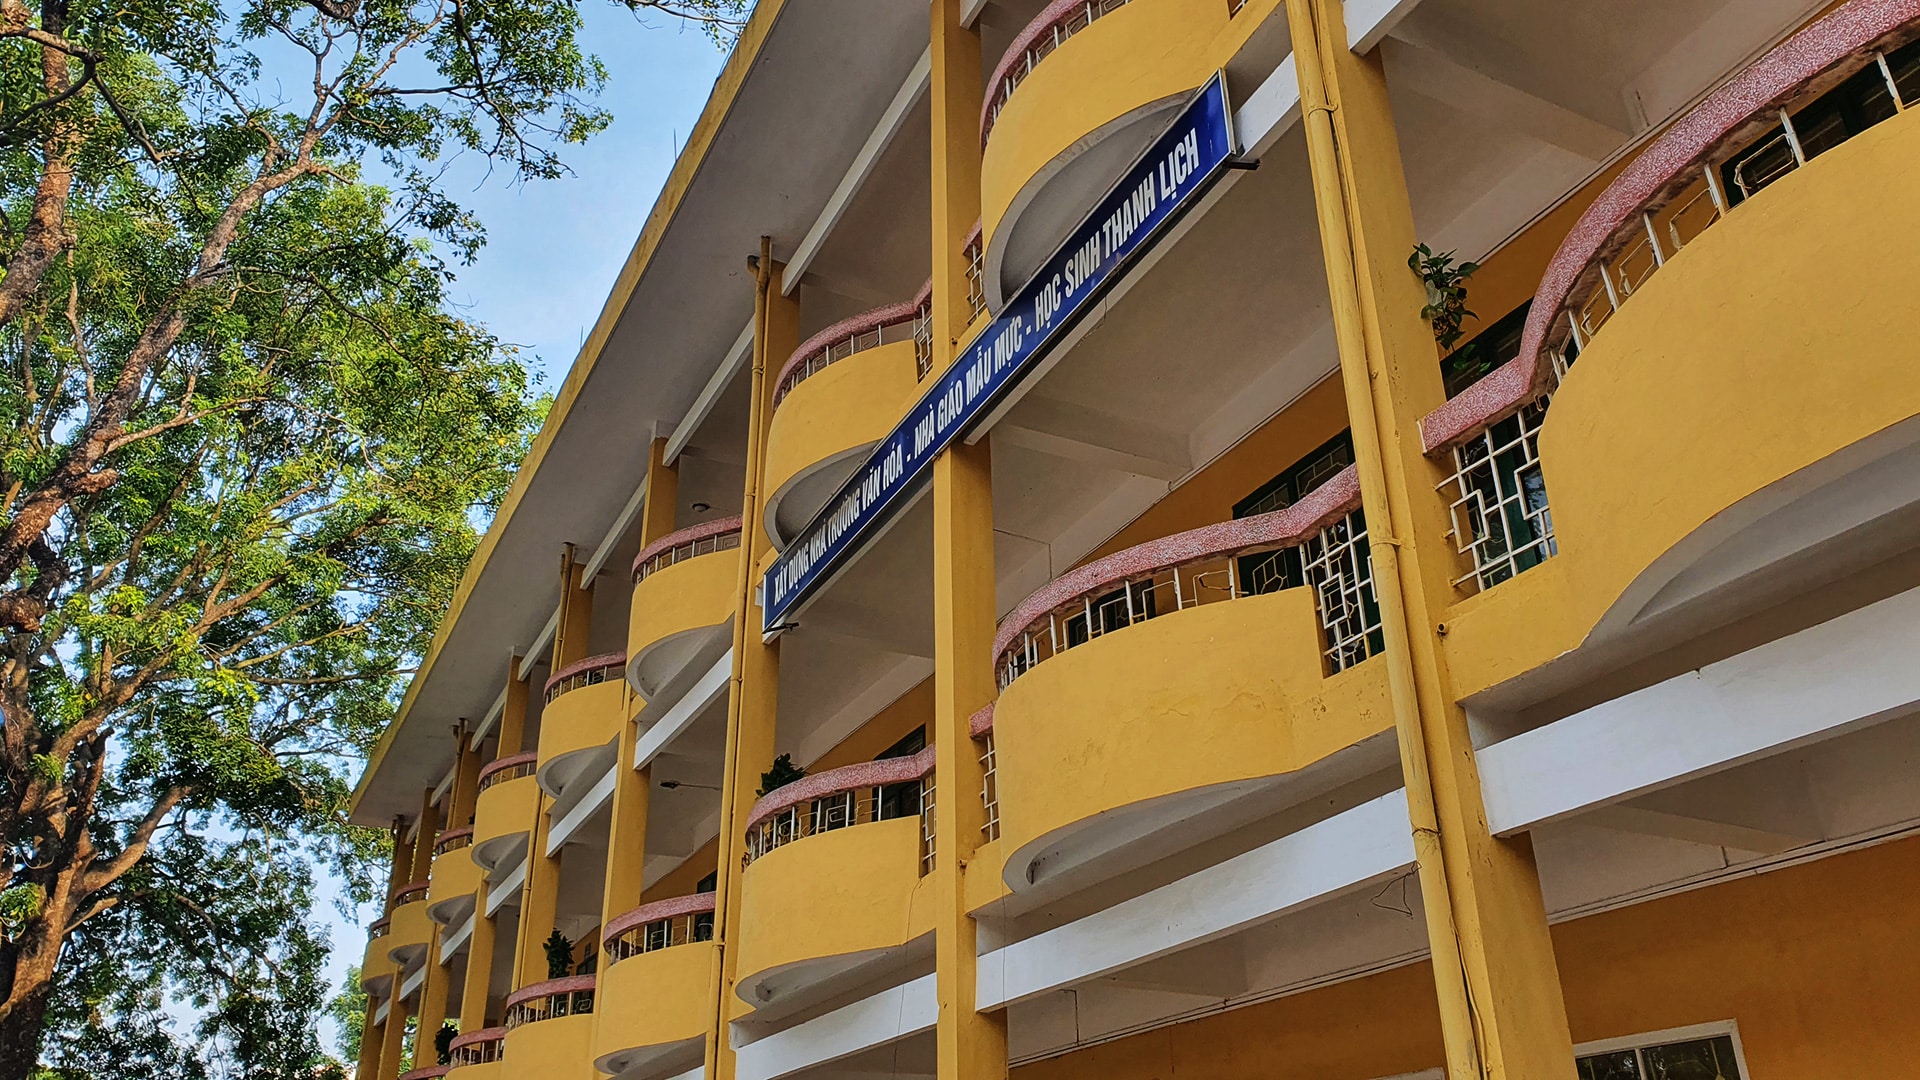 typical ochre school building in Hanoi